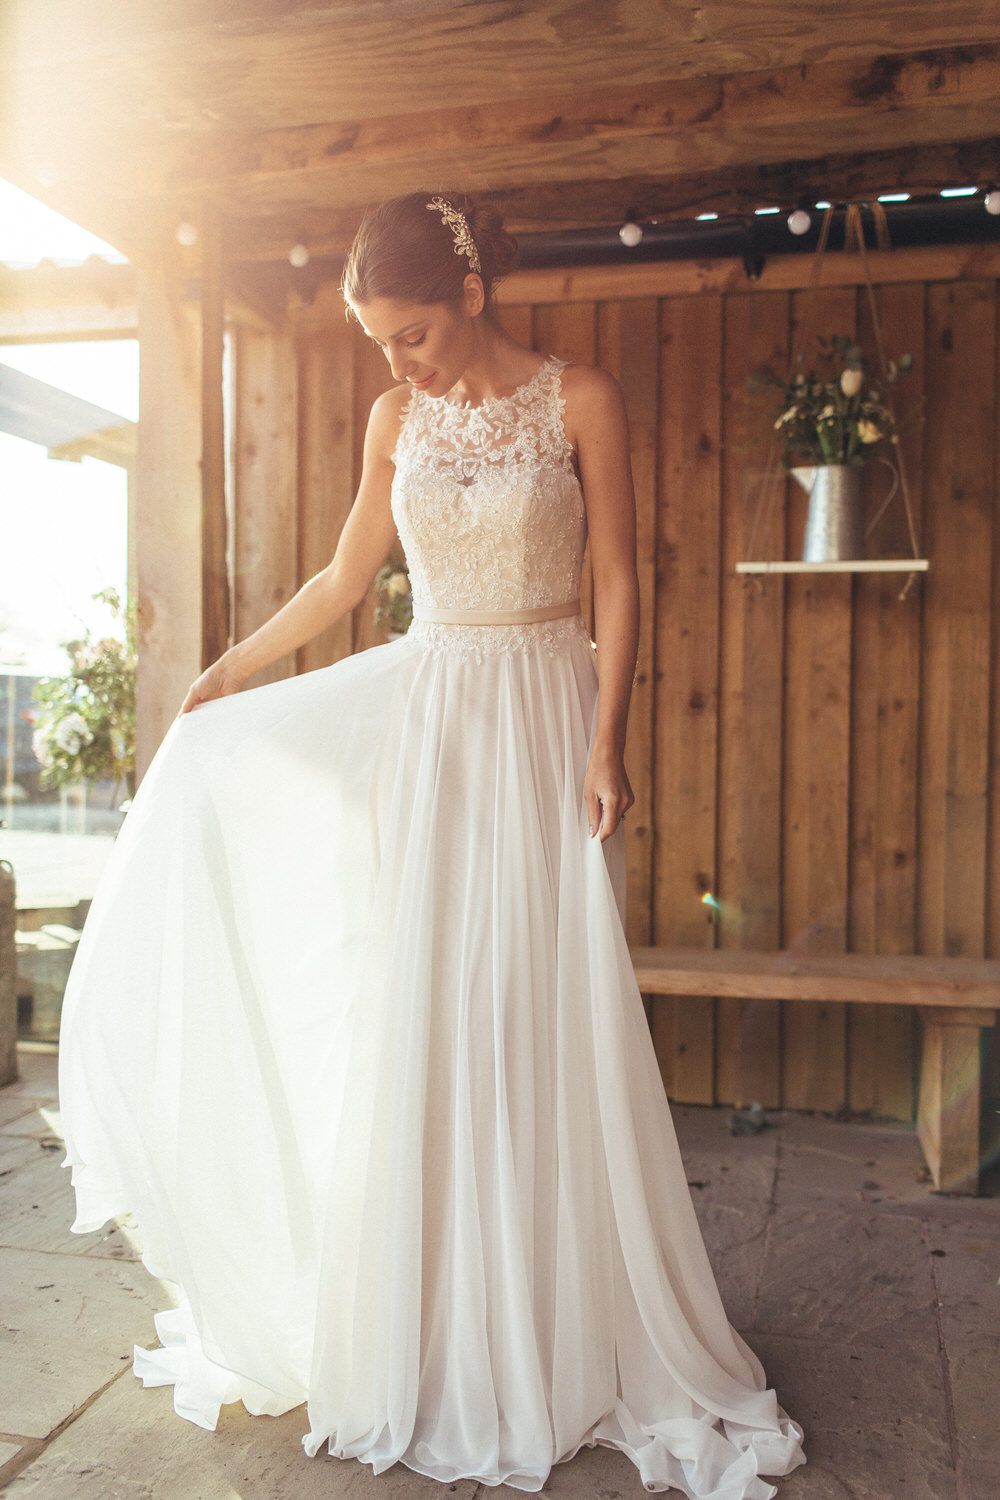 elegant high-neck wedding dresses